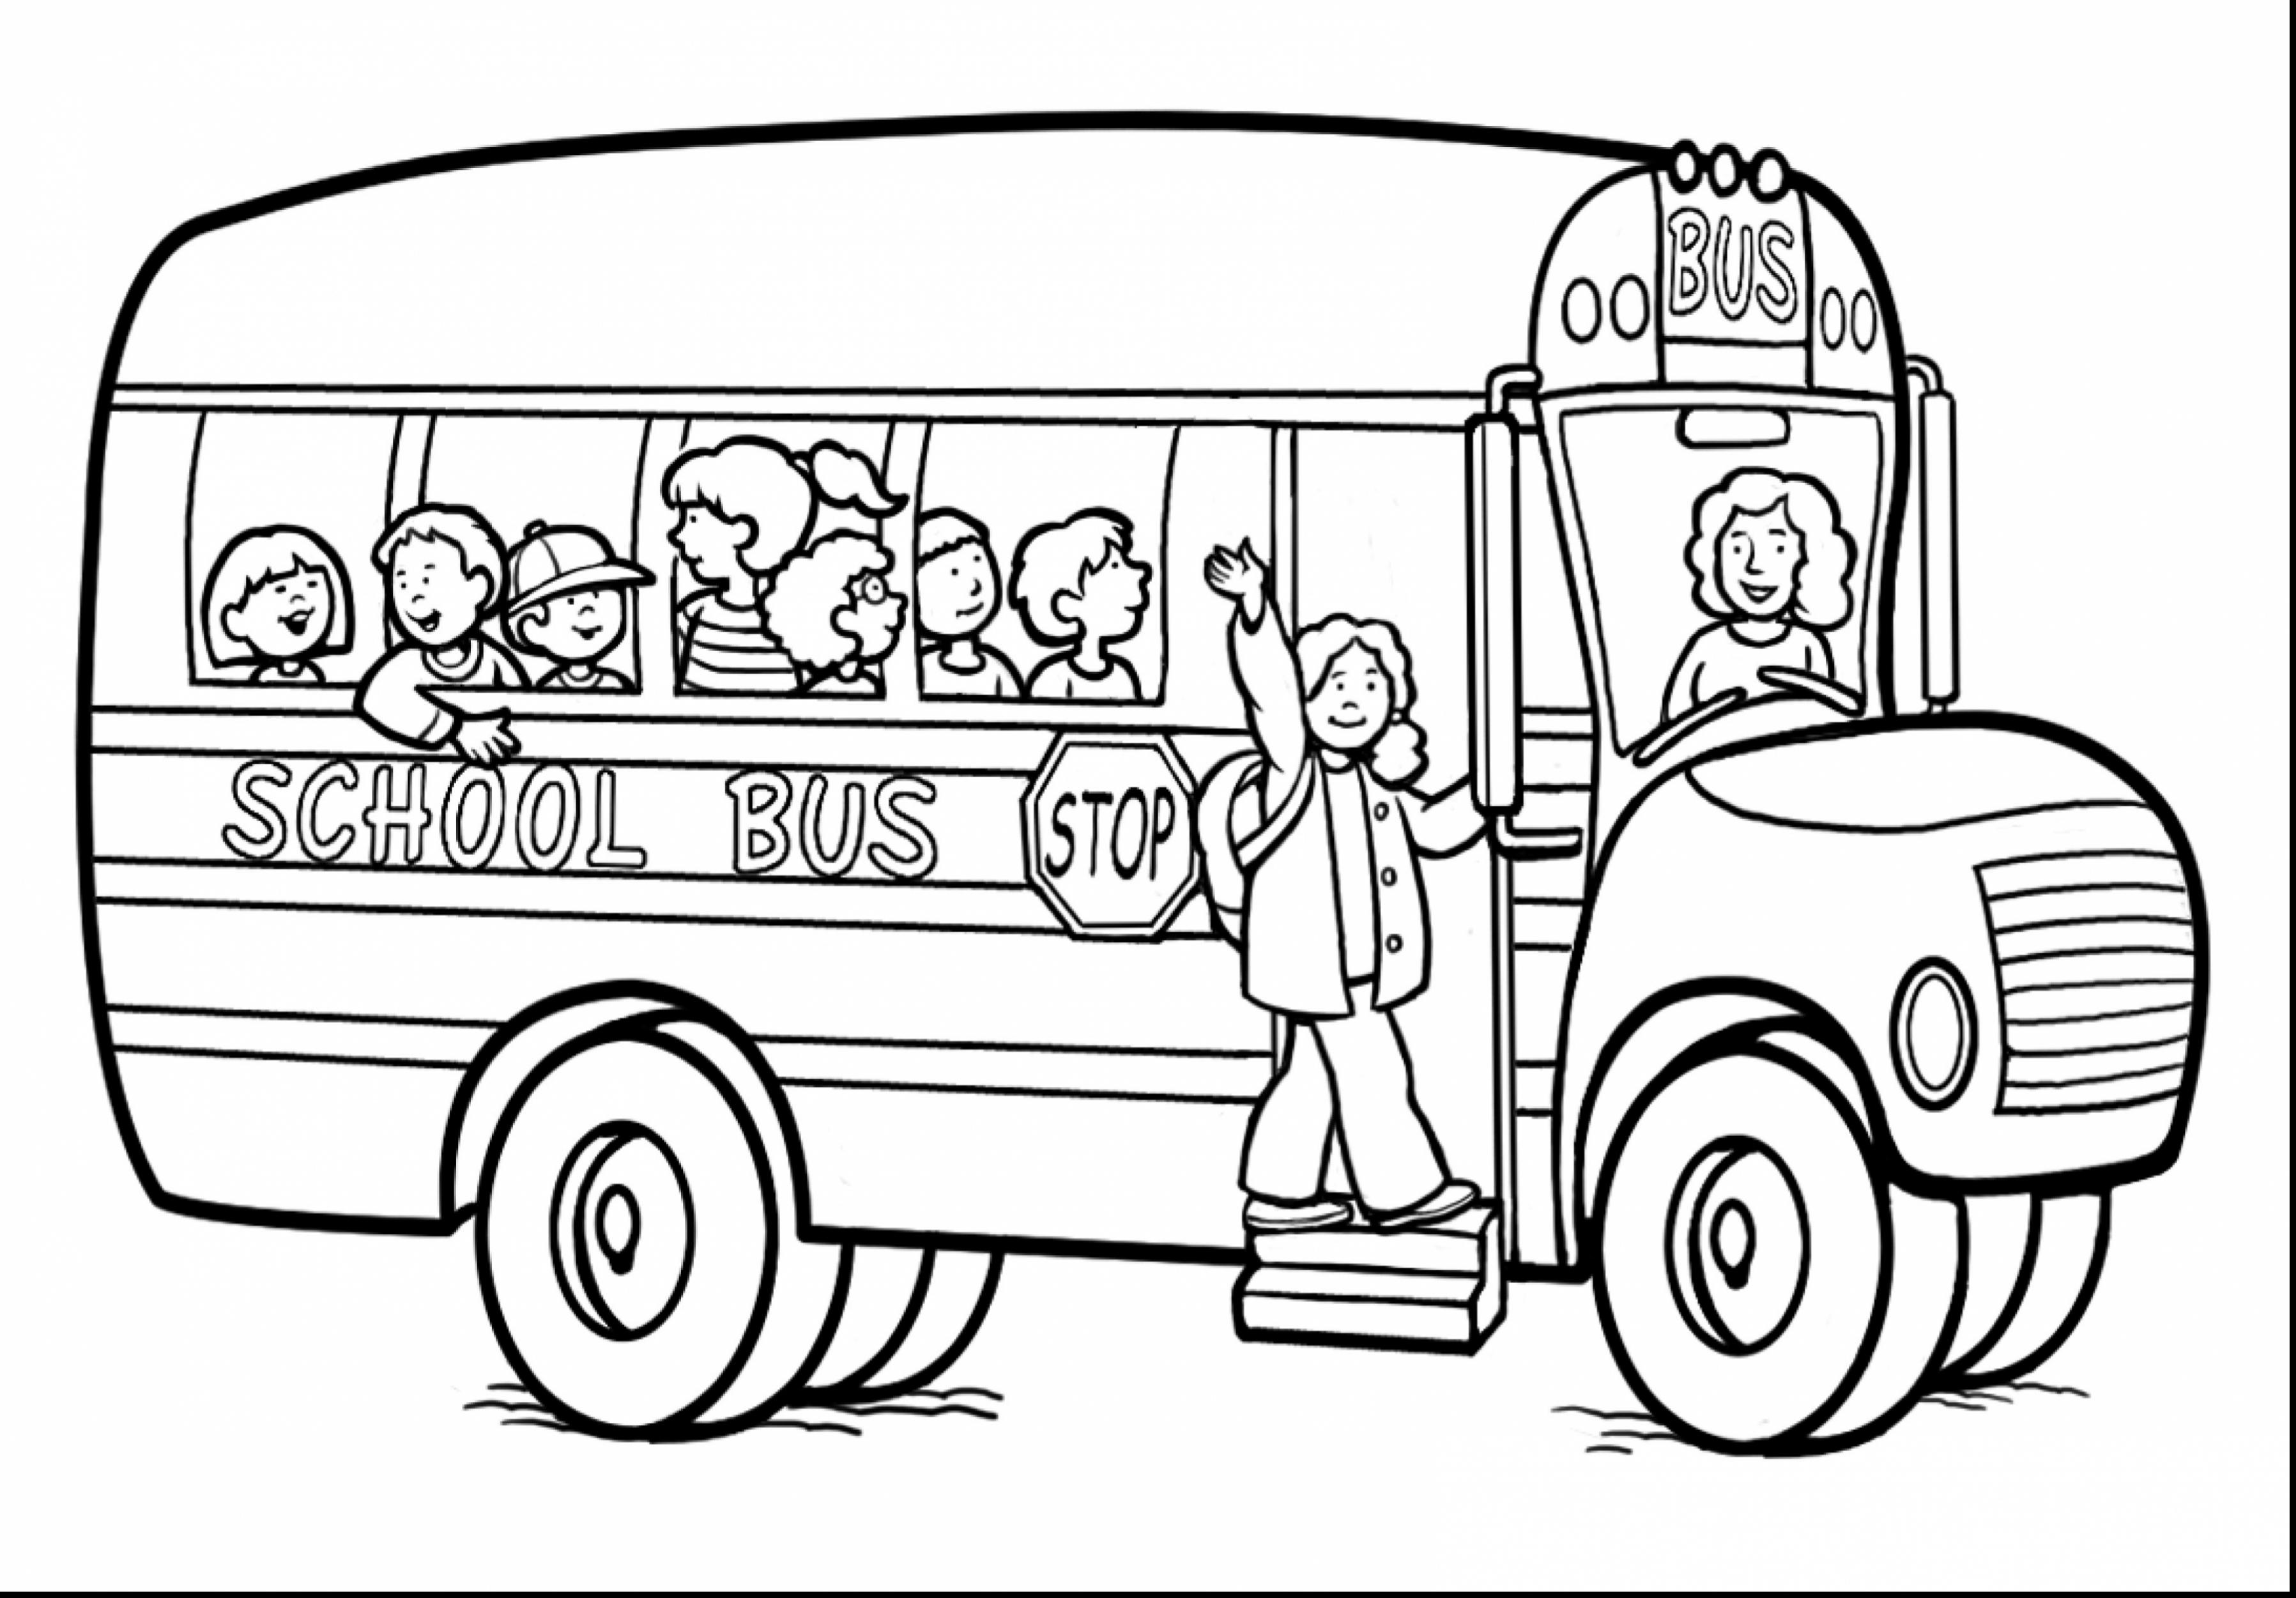 Free school bus.